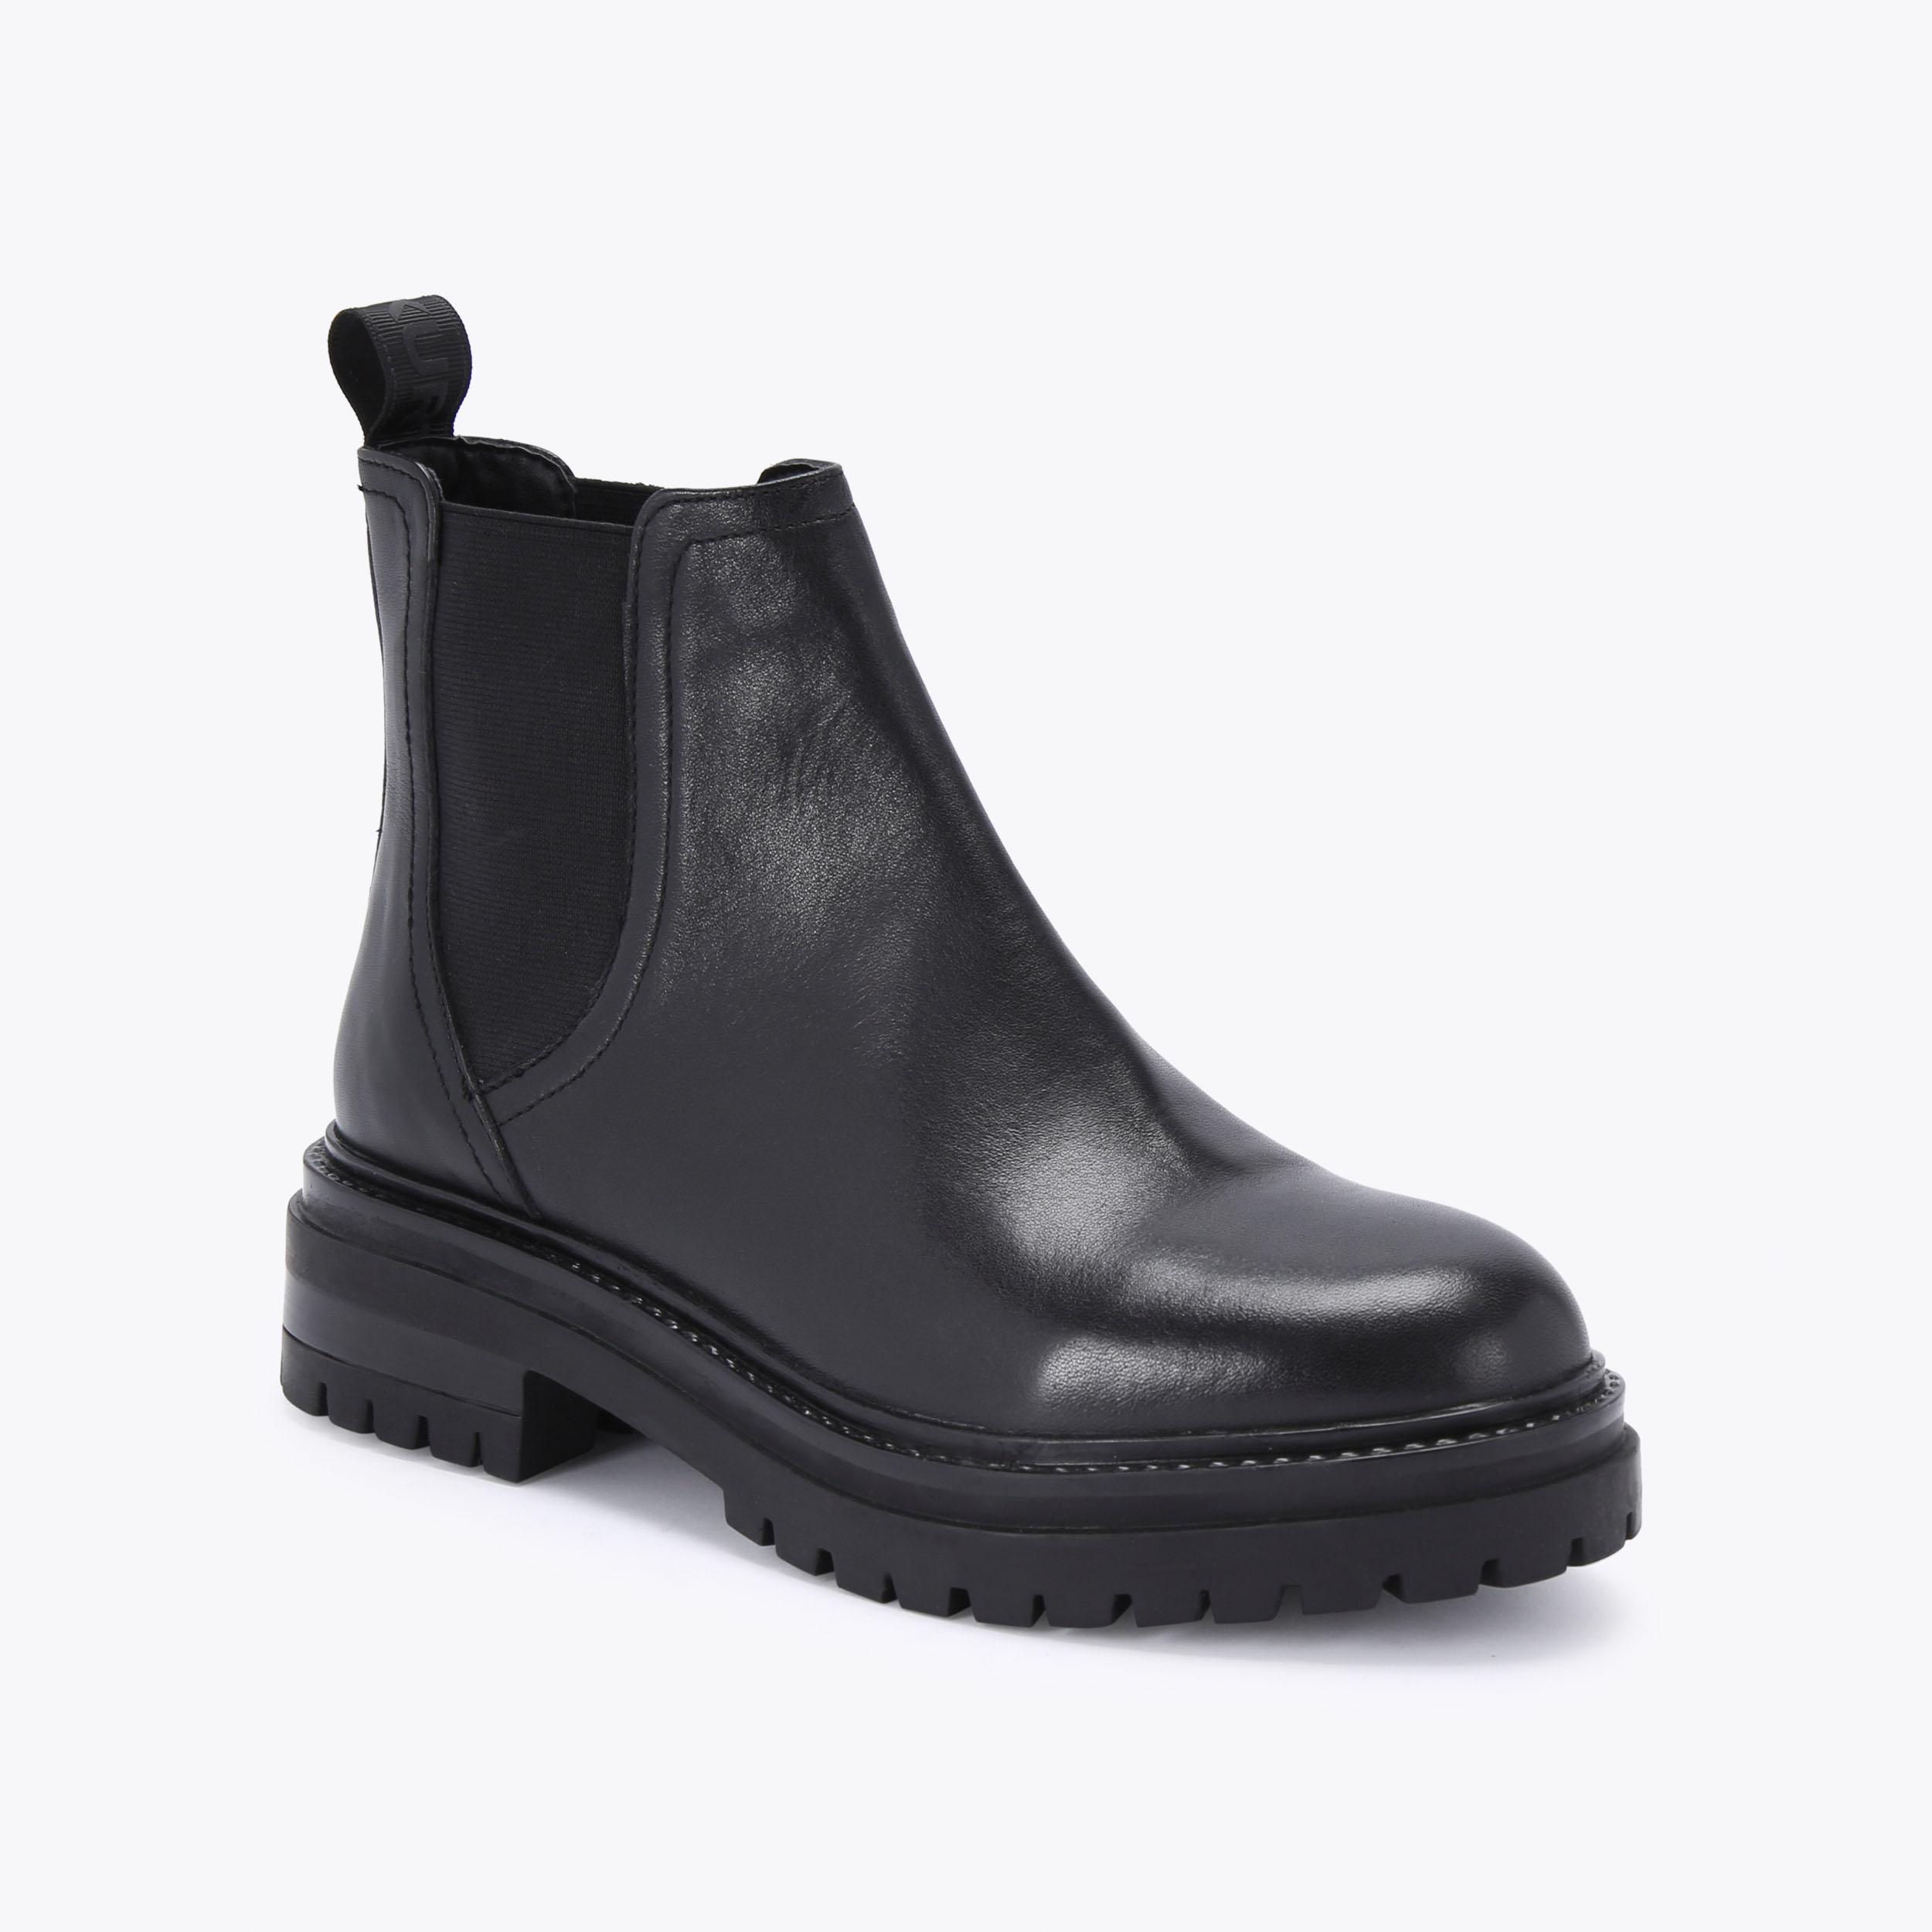 TASHA Black Leather Chelsea Boots by KG KURT GEIGER